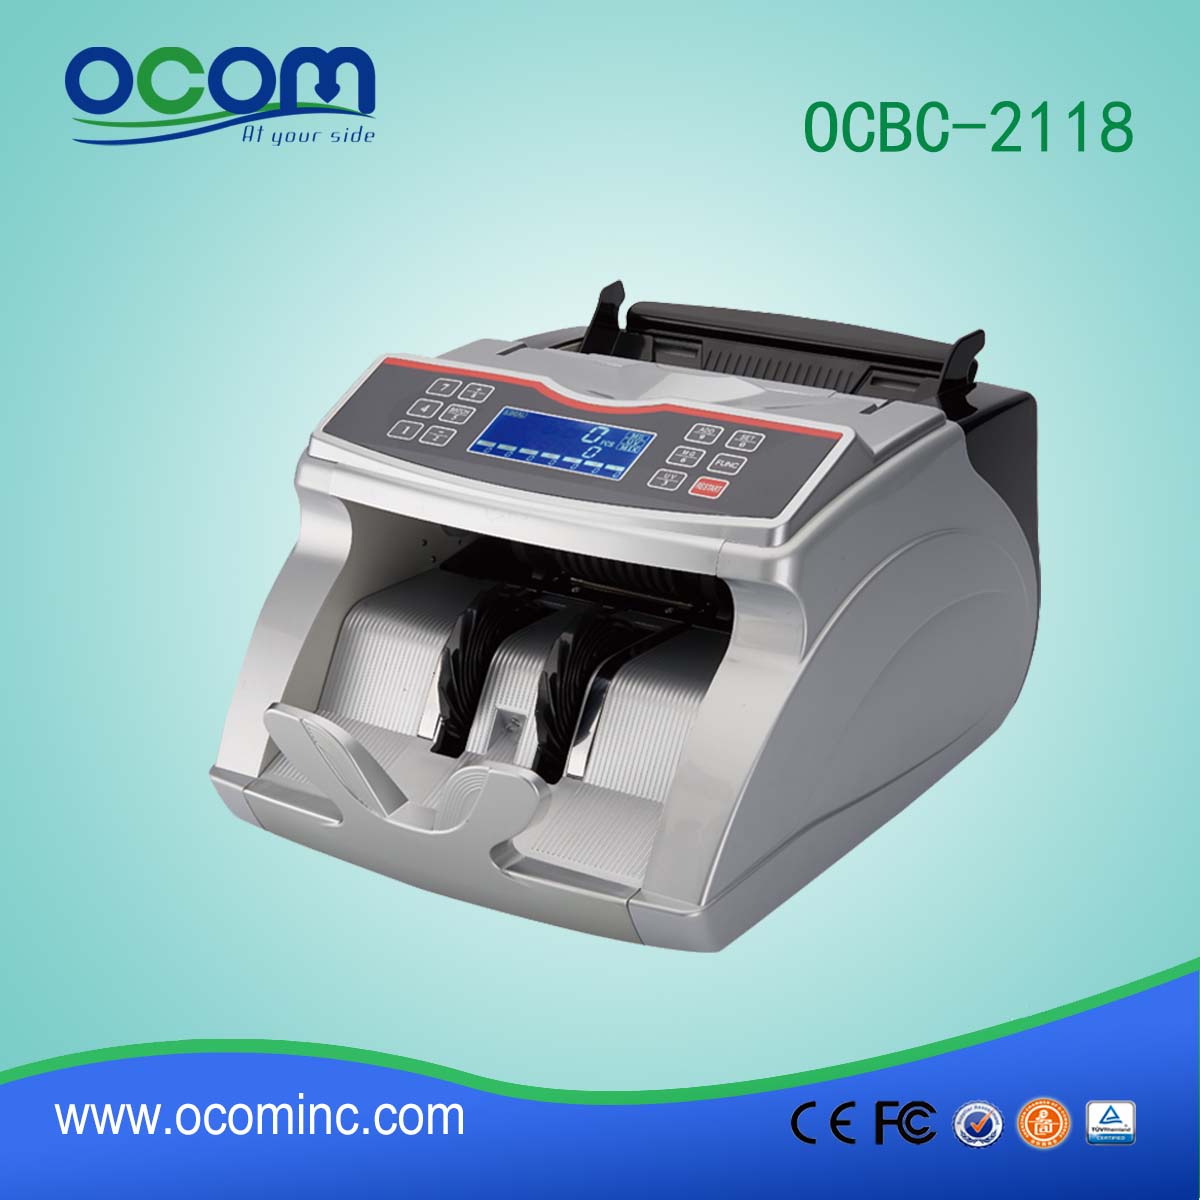 magner μίνι νόμισμα μετρητή σημείωμα καταμέτρηση και τον έλεγχο της μηχανής με την τιμή (OCBC-2118)